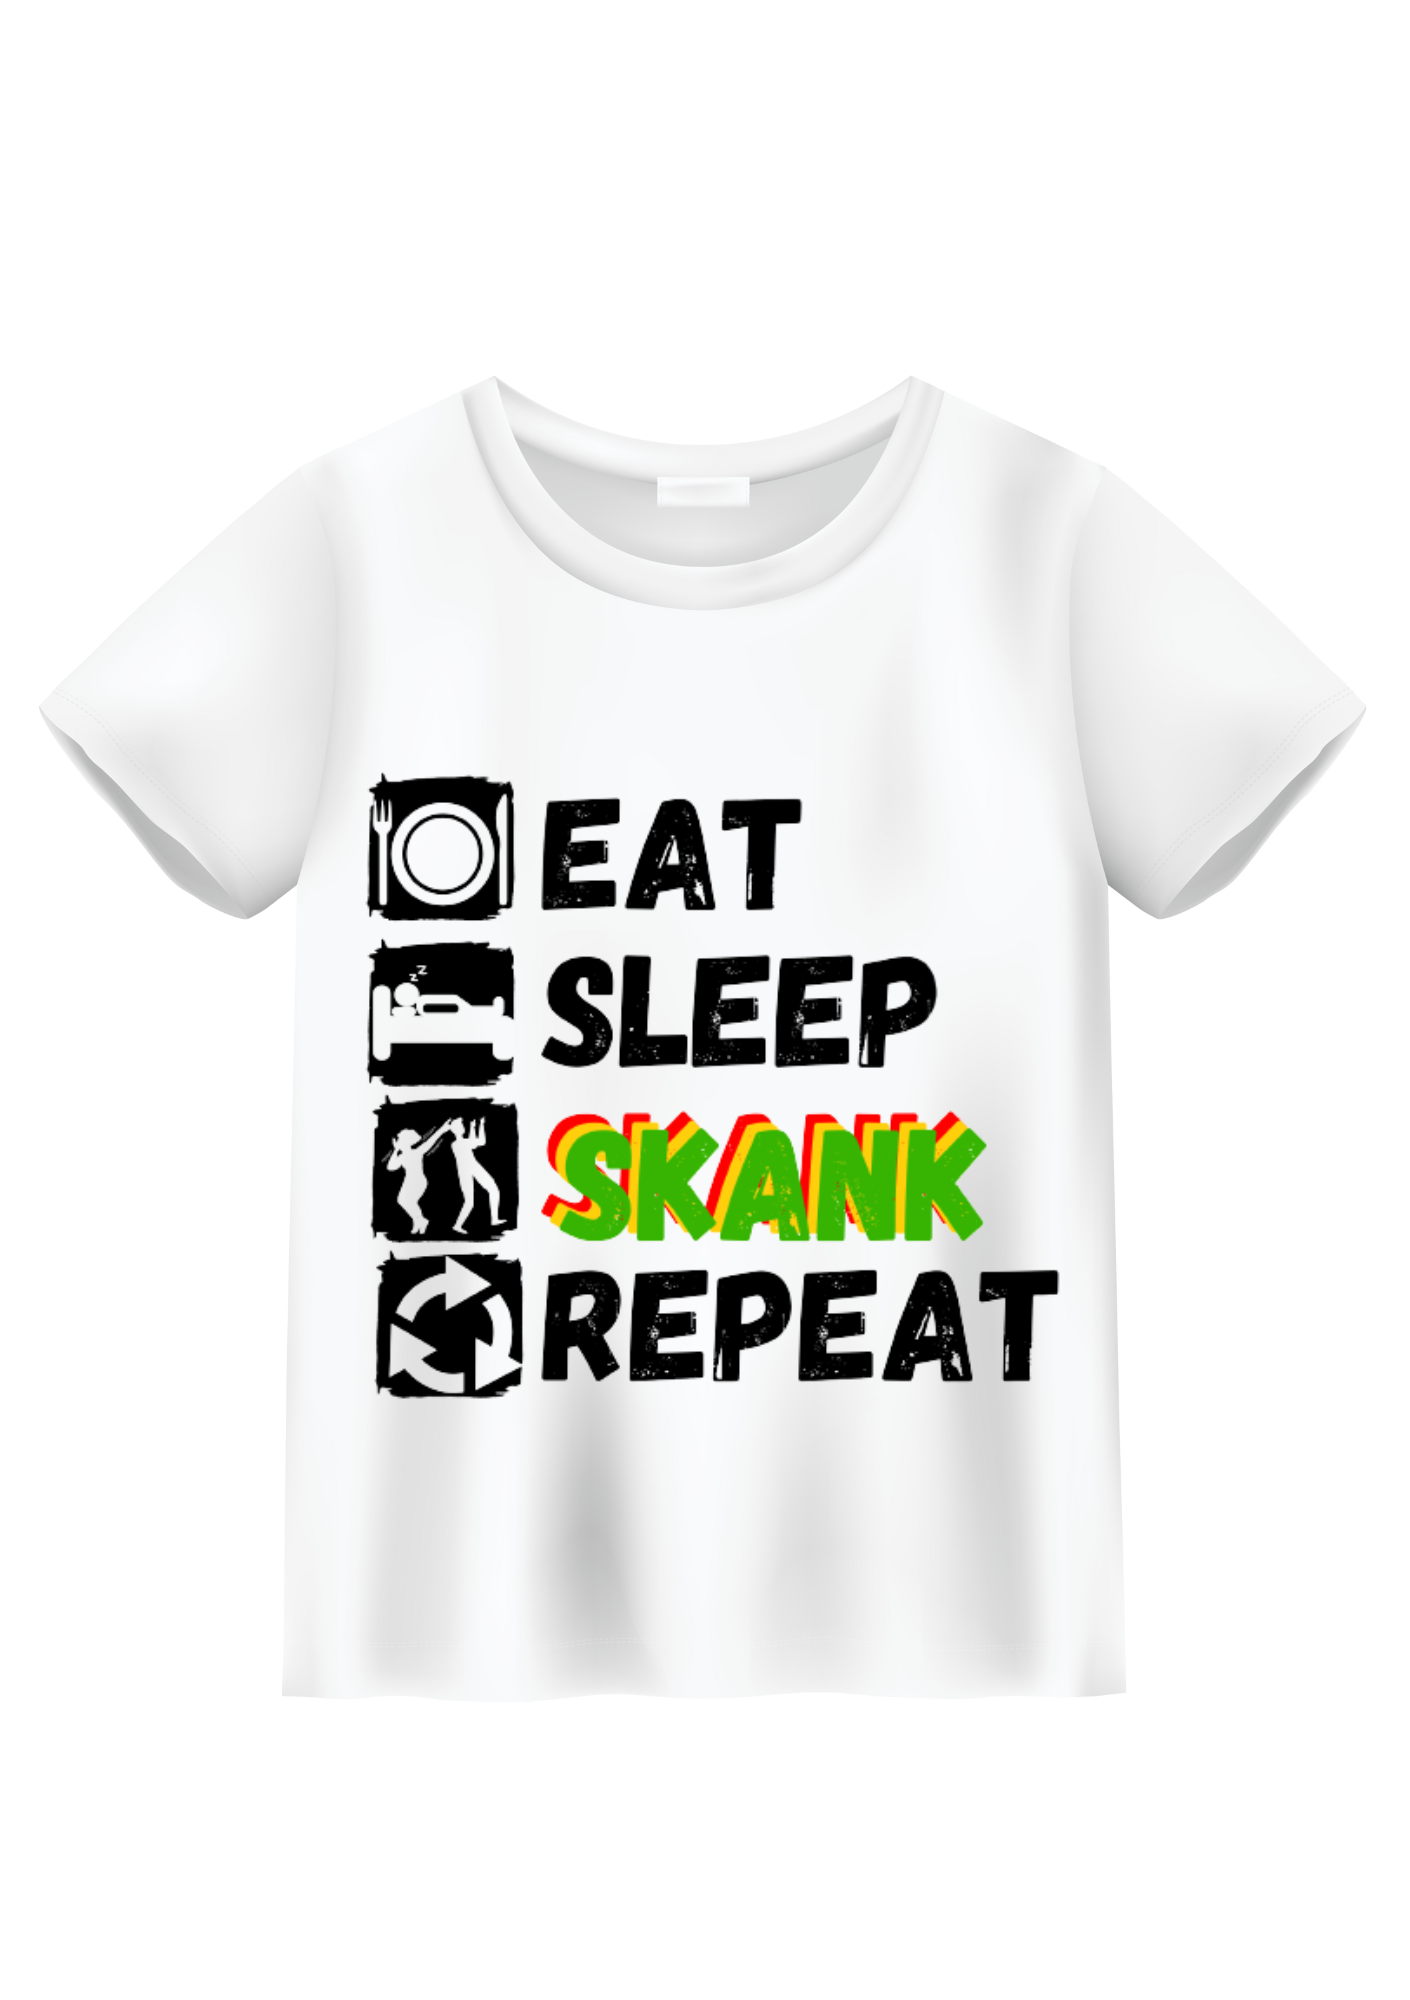 Eat, Sleep, Skank, Repeat T-Shirt